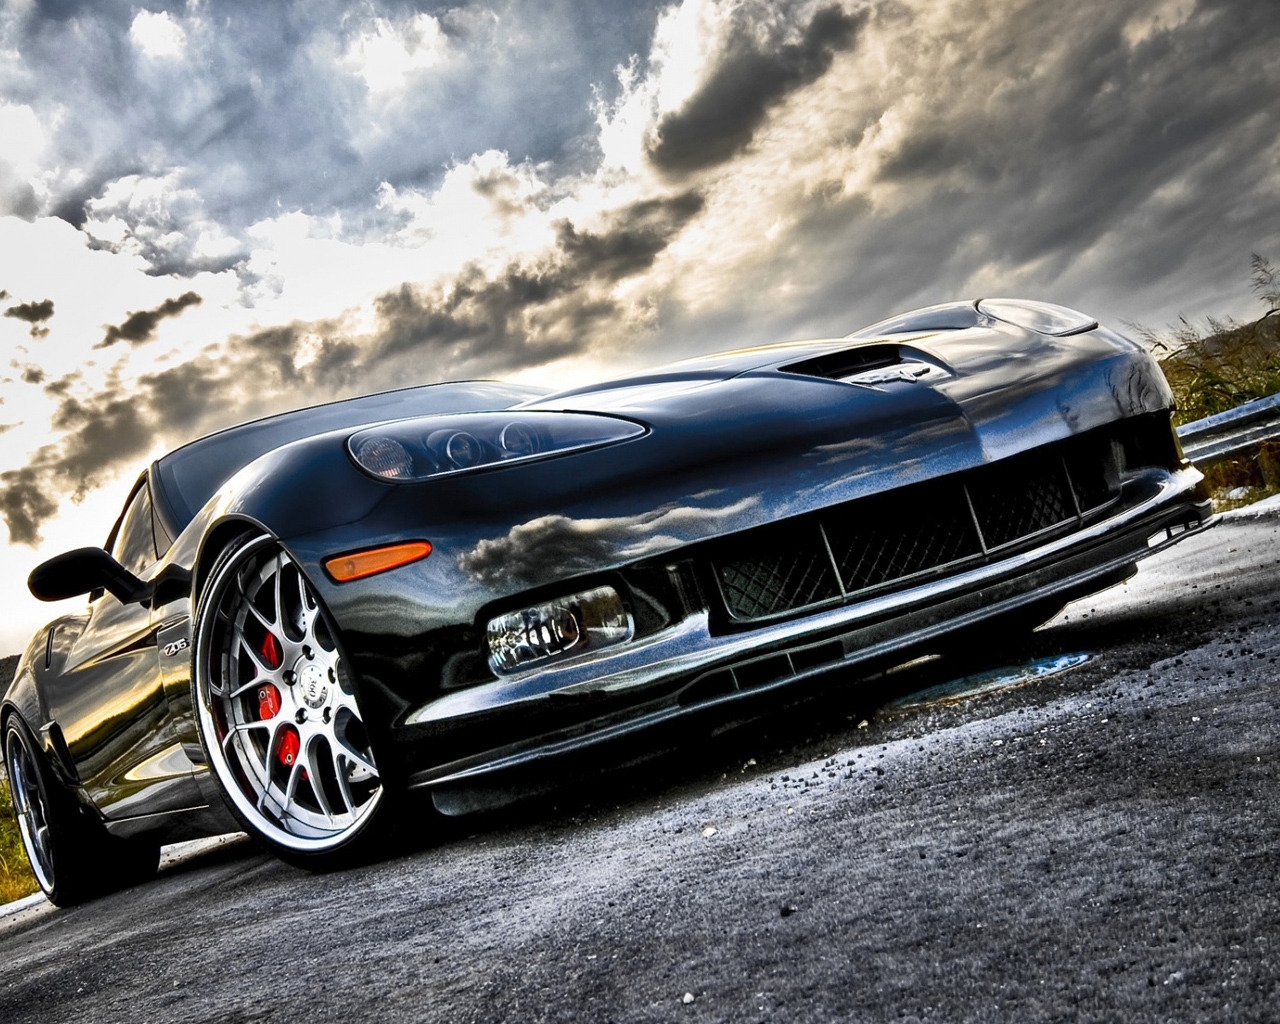 Corvette Super Sport Front Angle for 1280 x 1024 resolution